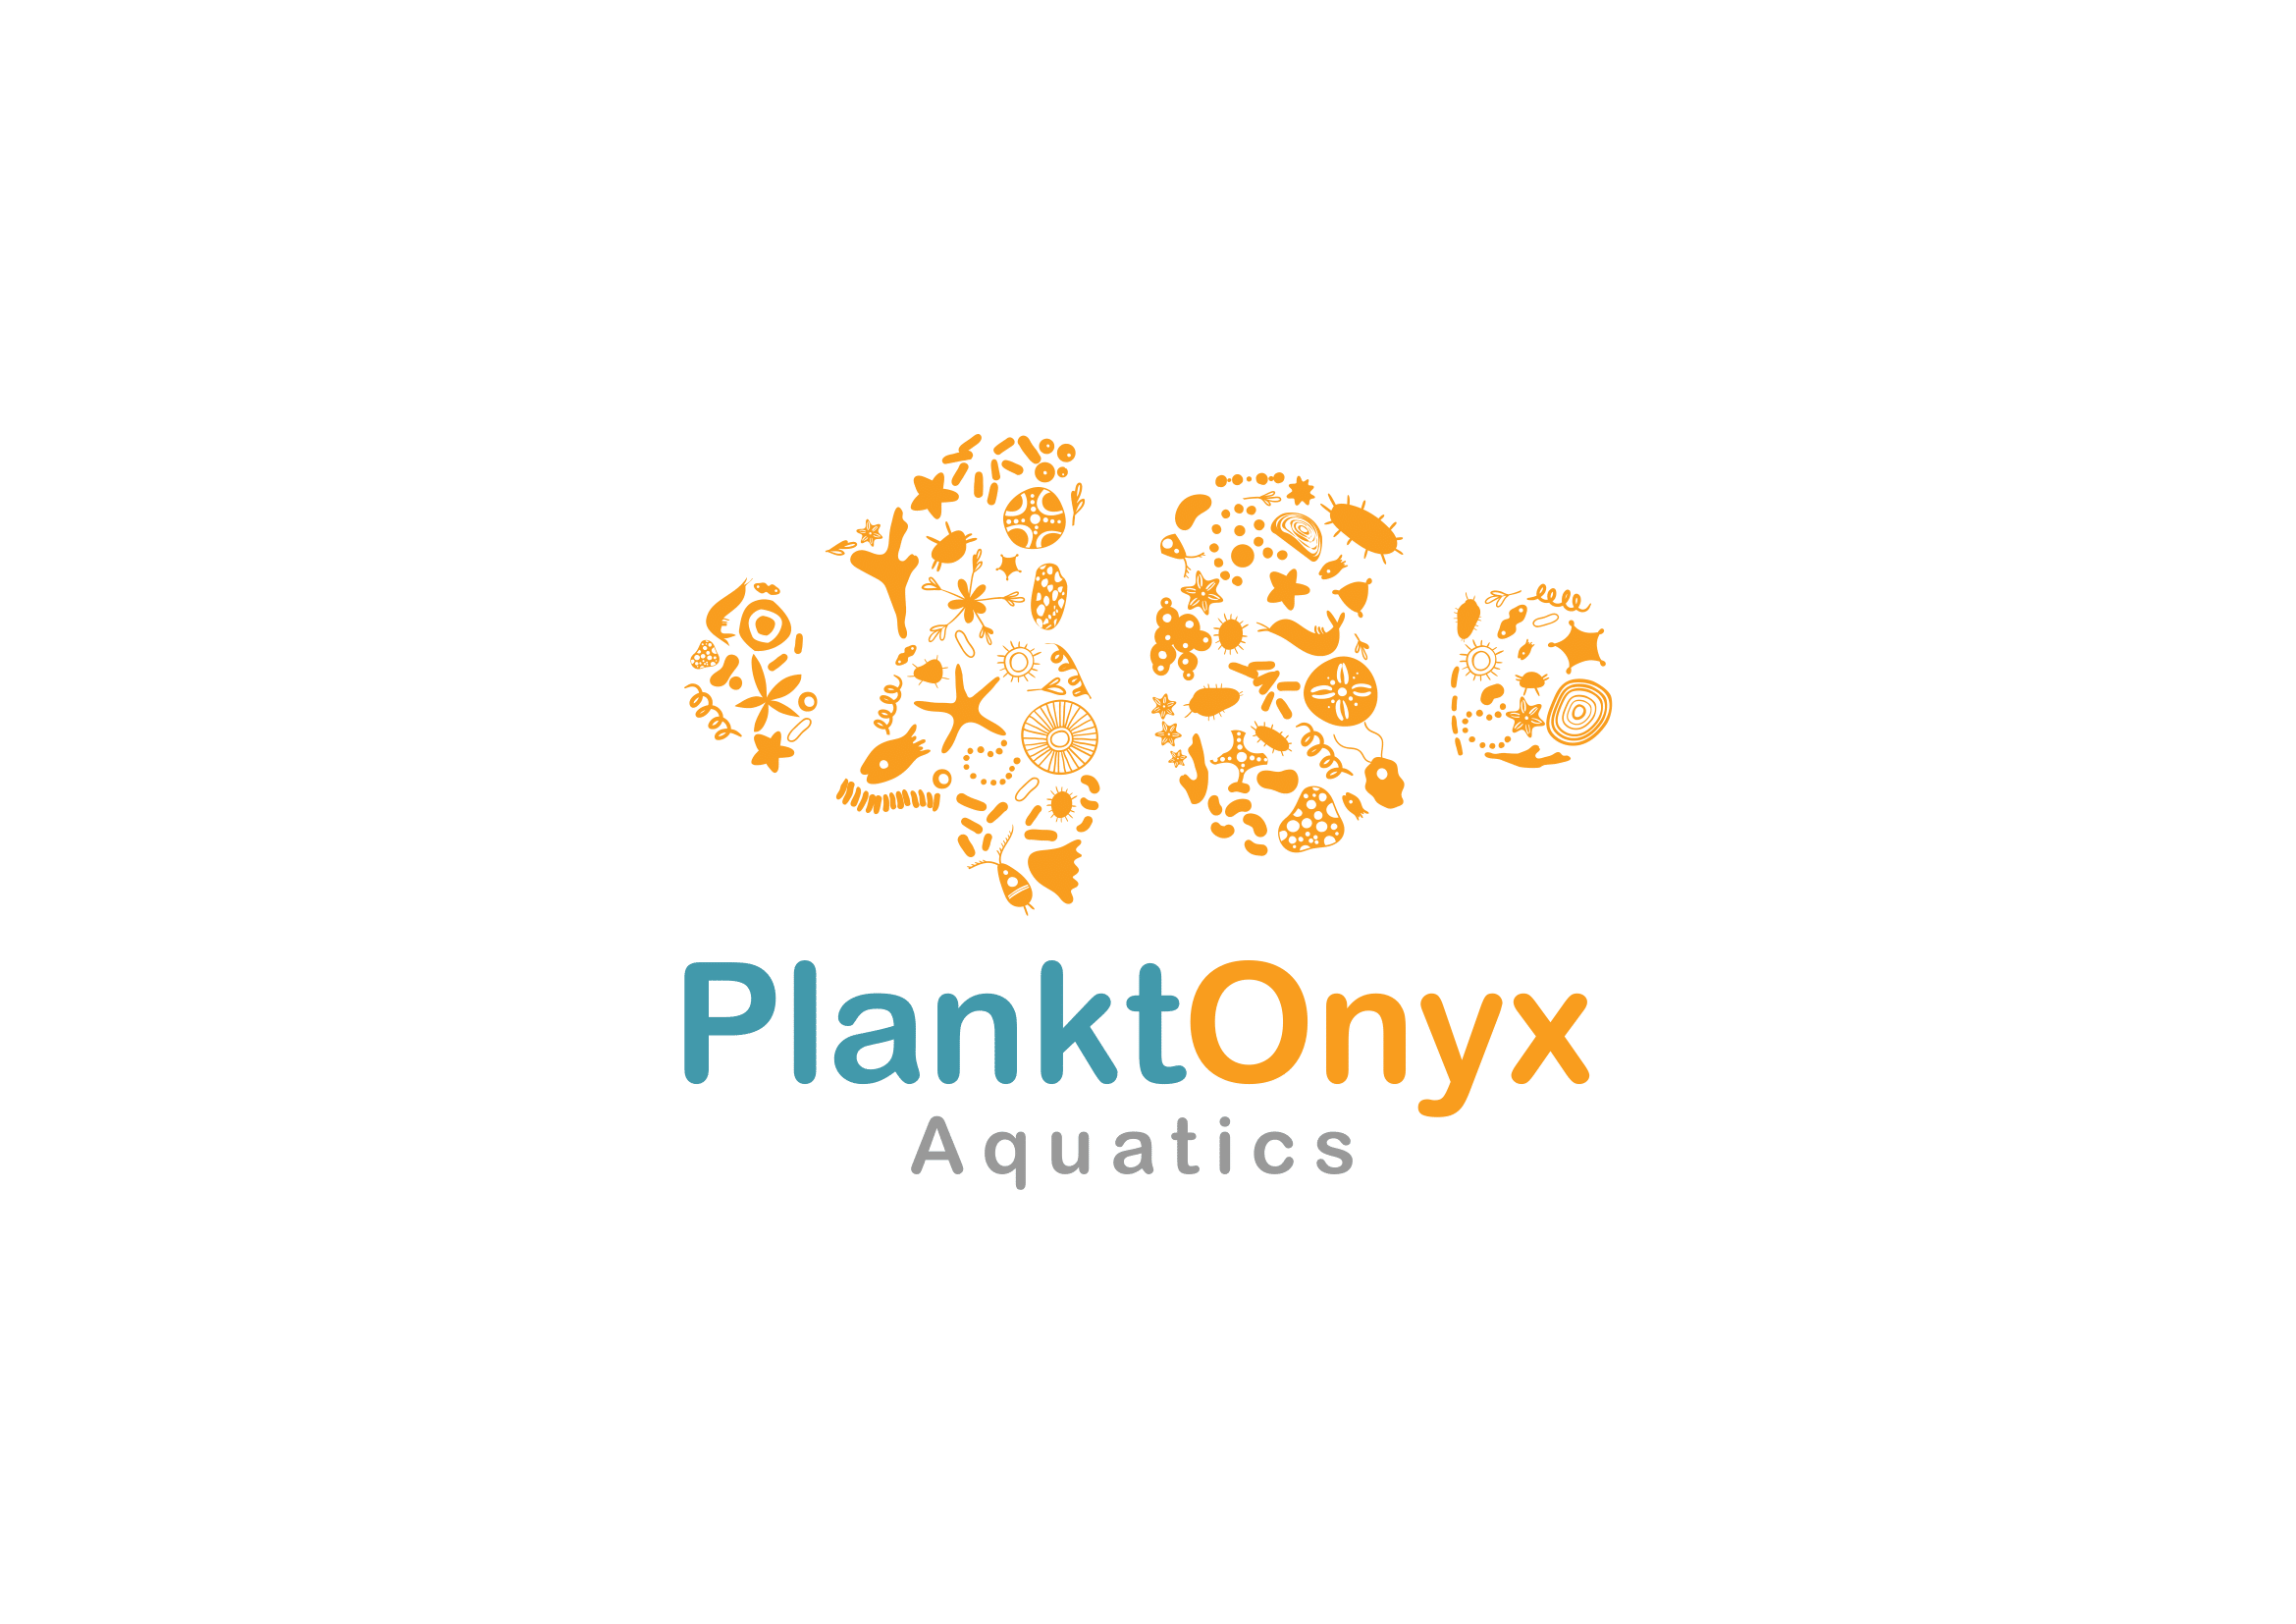 PlanktOnyx